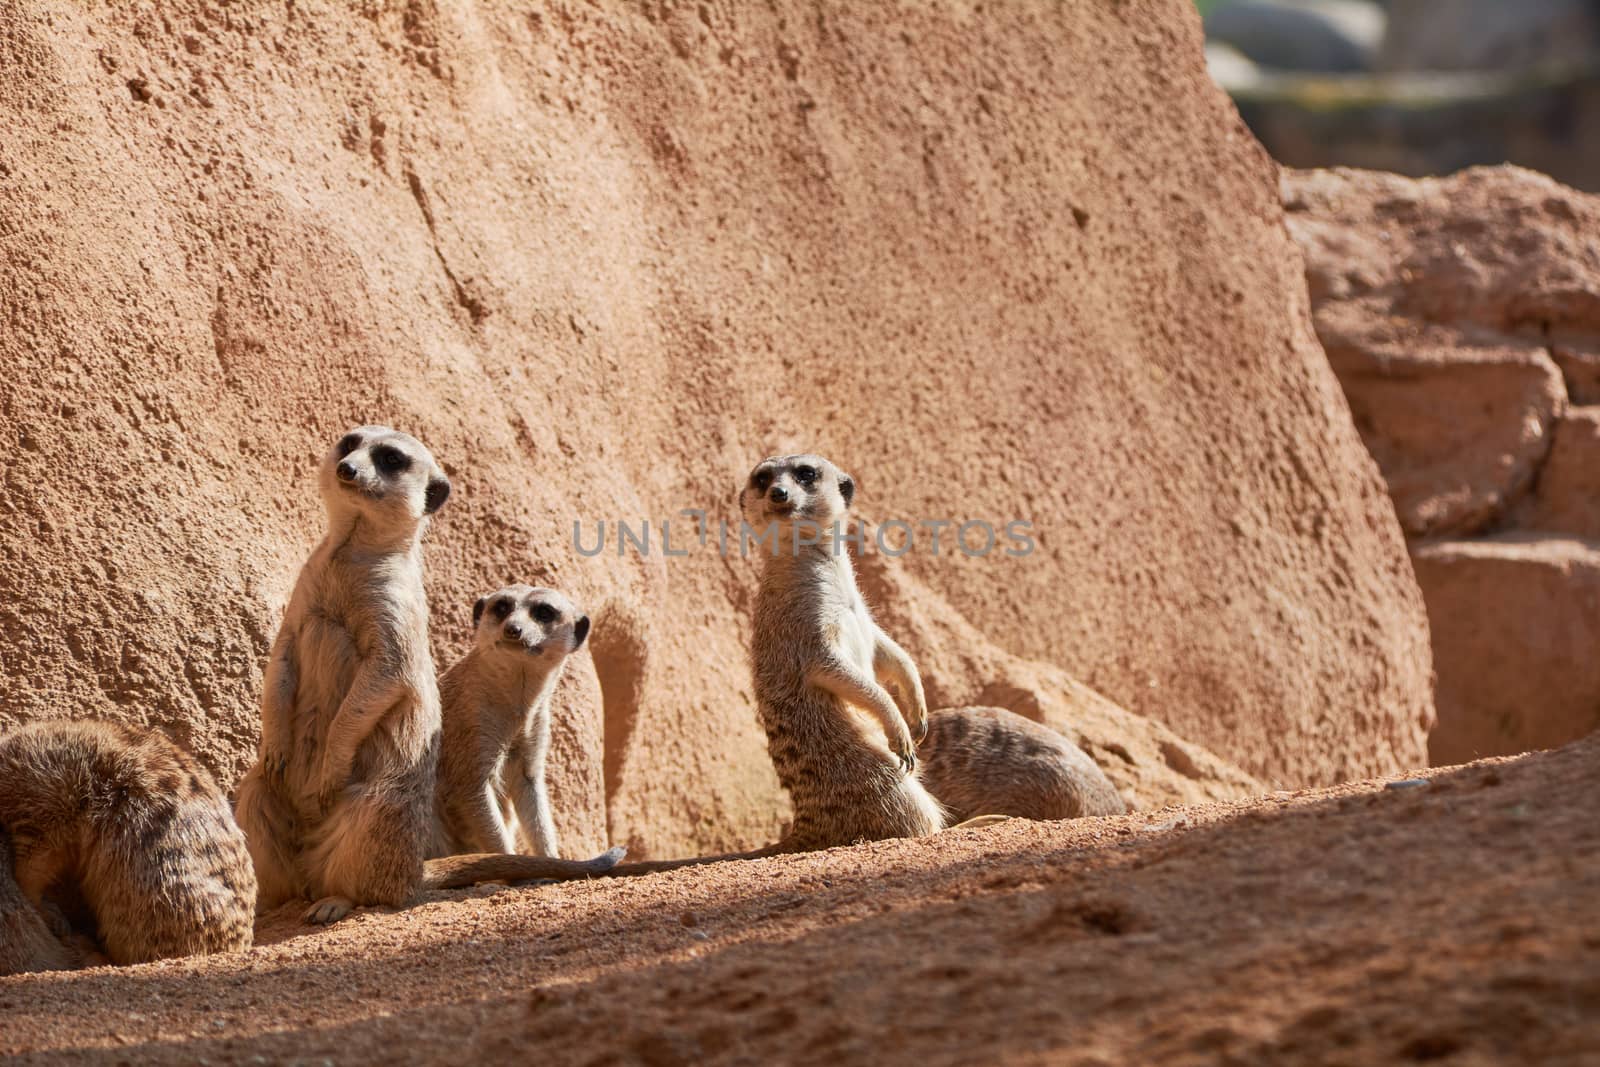 Three animals watching the dangers of nature. Gossip or alert?